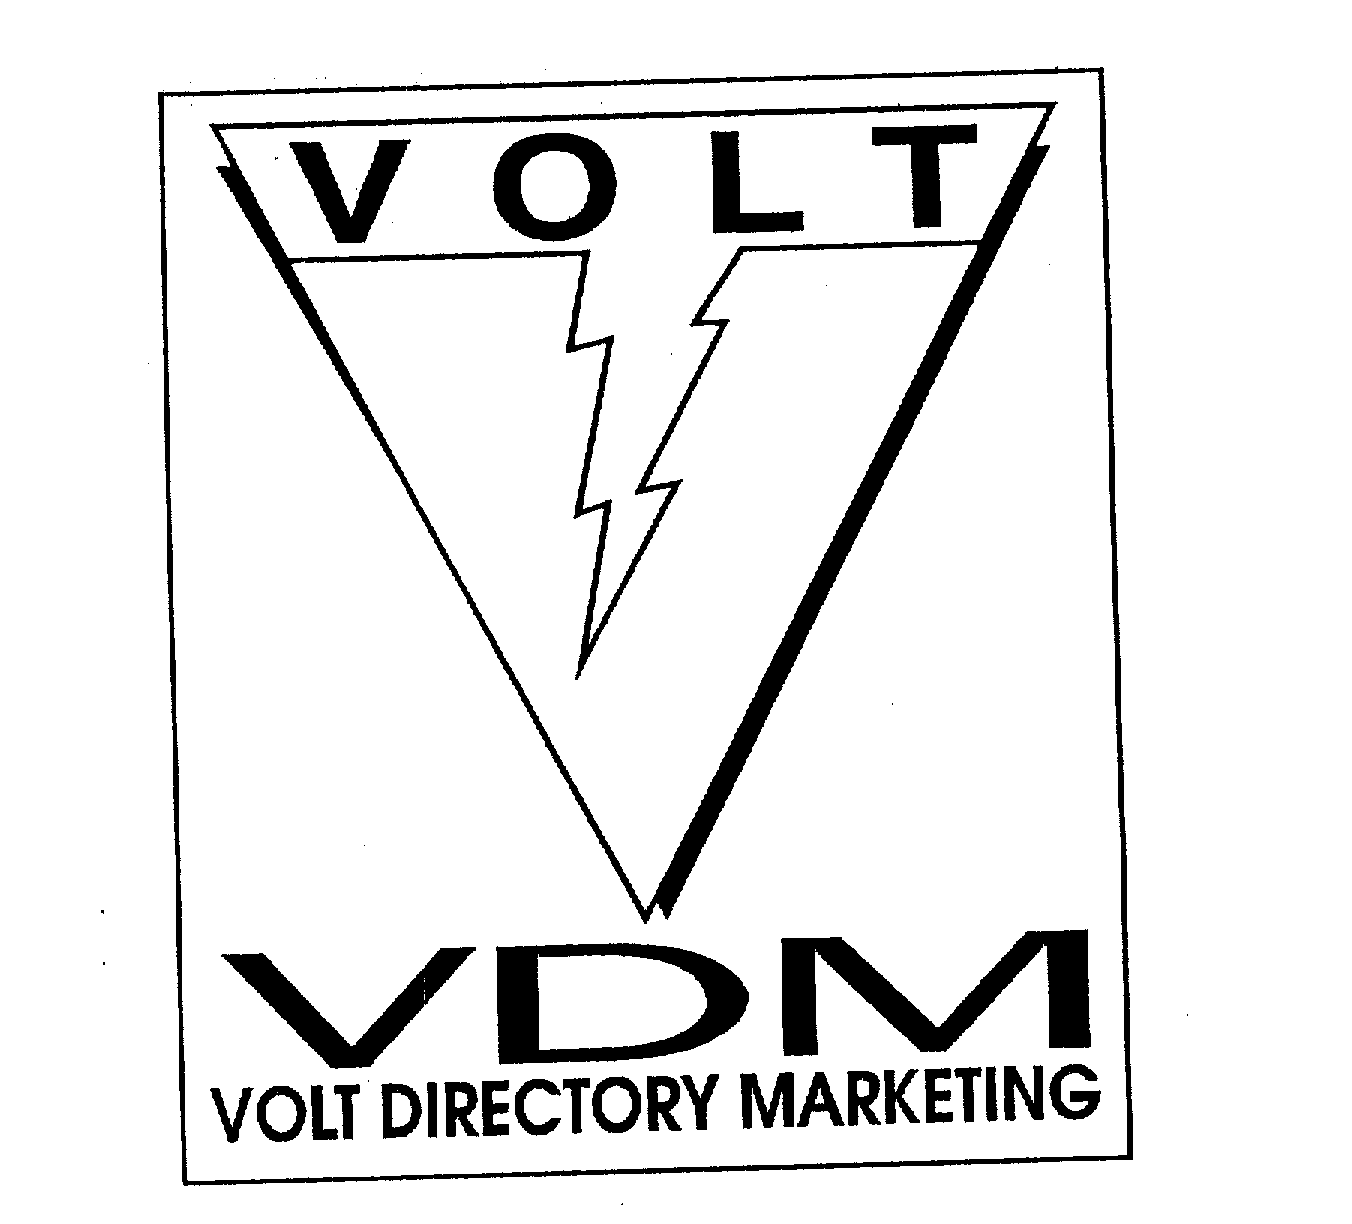  VOLT VDM VOLT DIRECTORY MARKETING